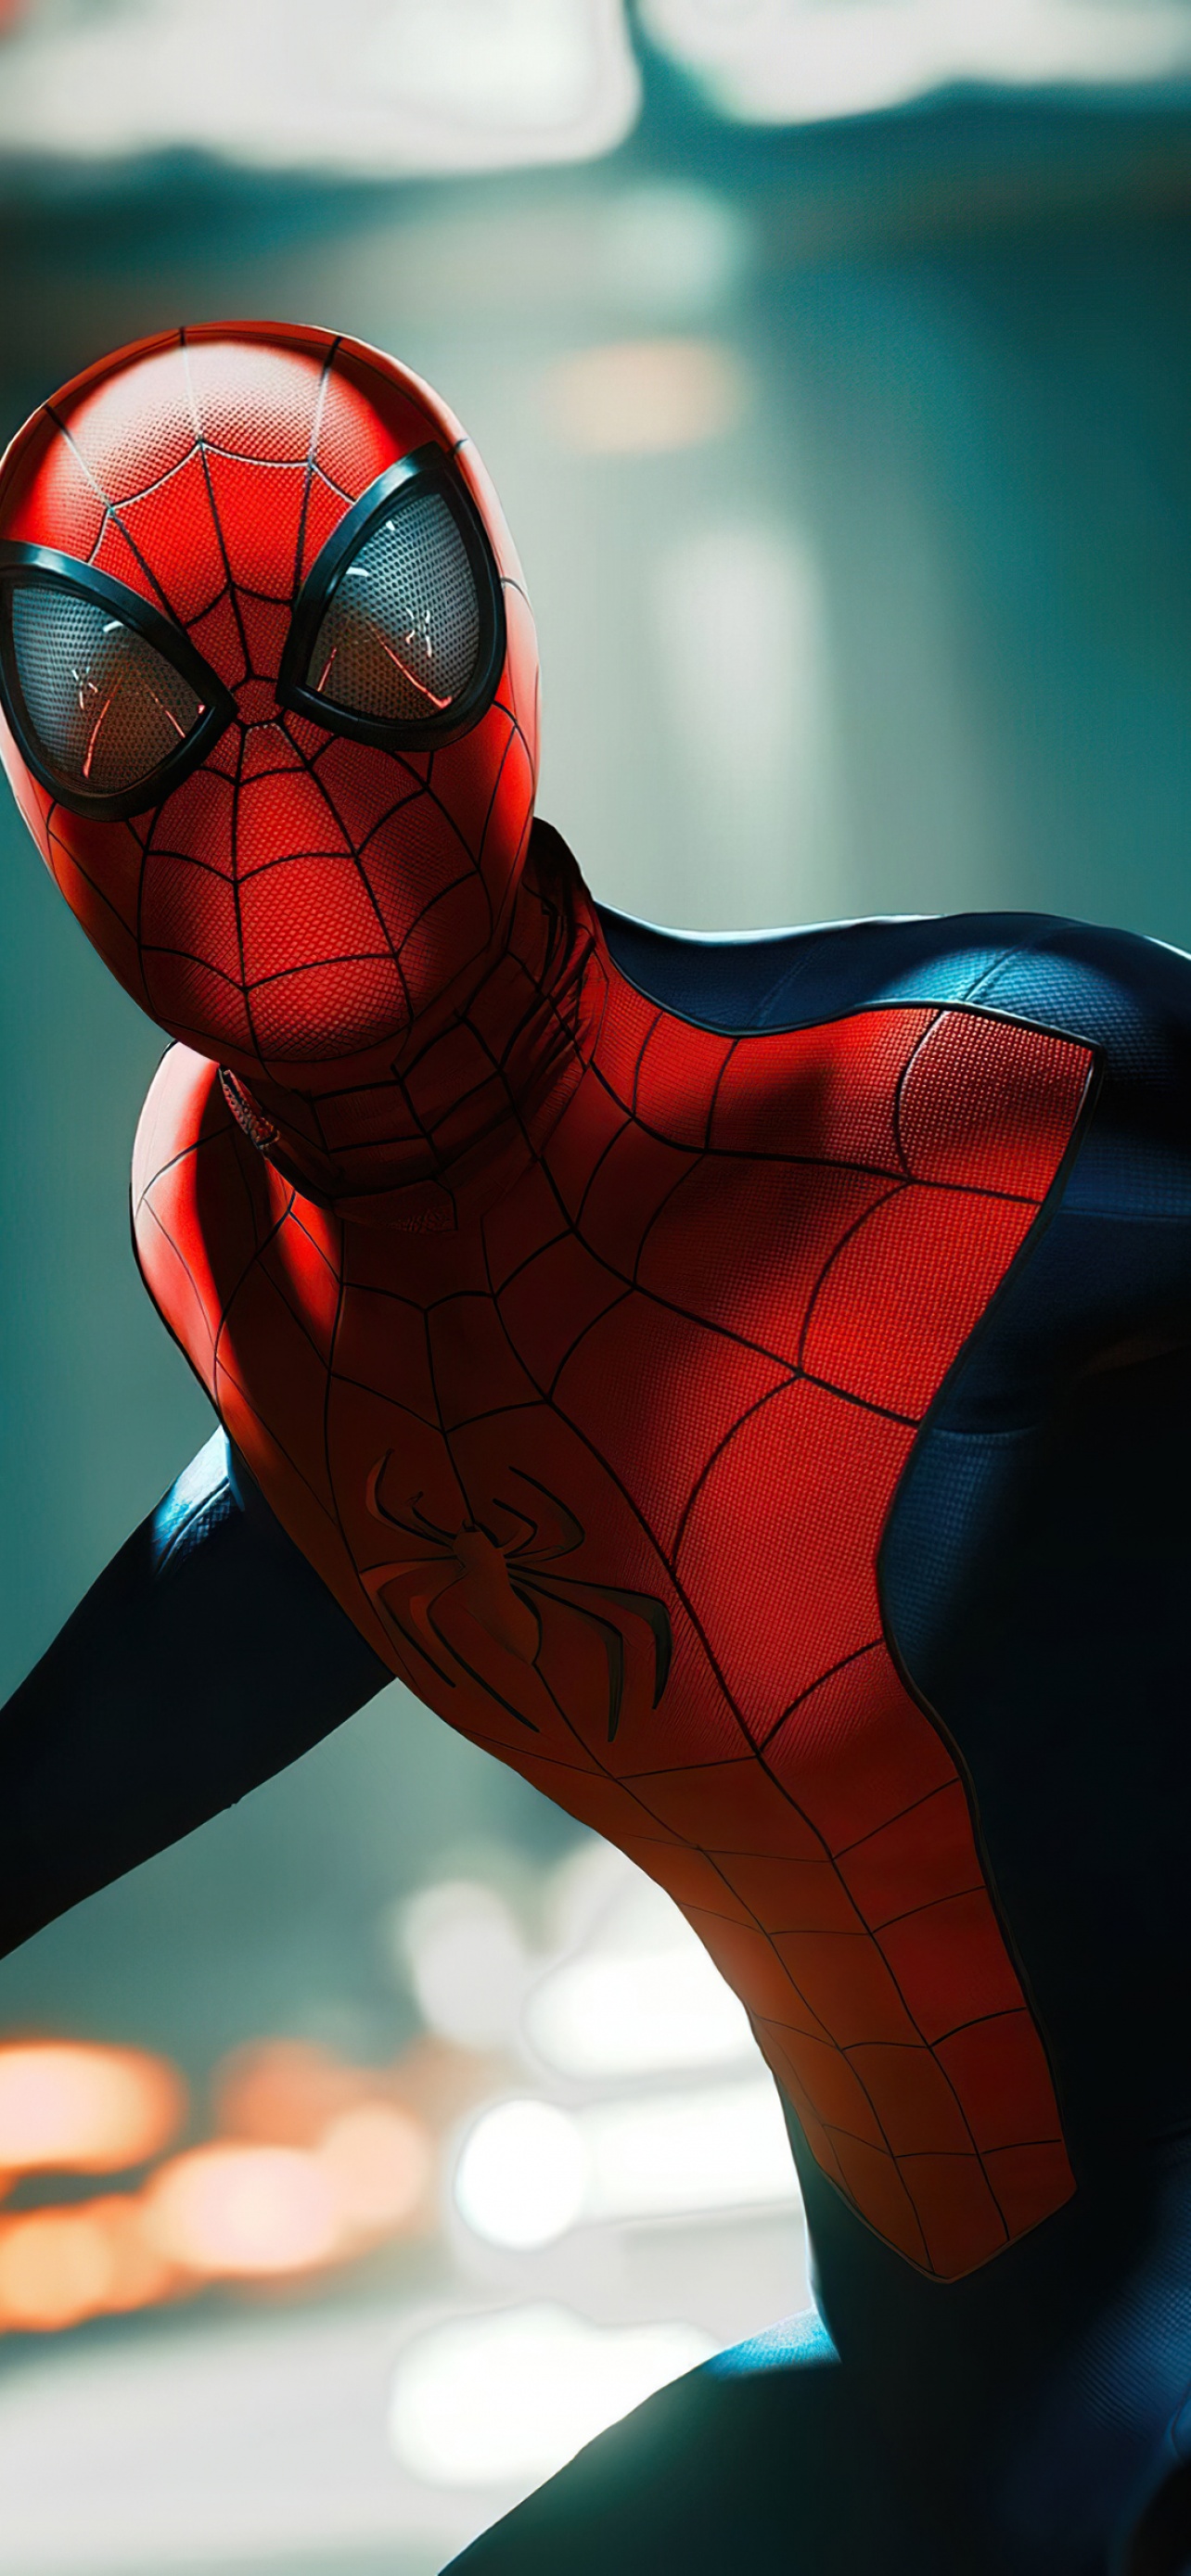 SpiderMan Wallpaper 4K Marvel Superheroes Graphics CGI 4809